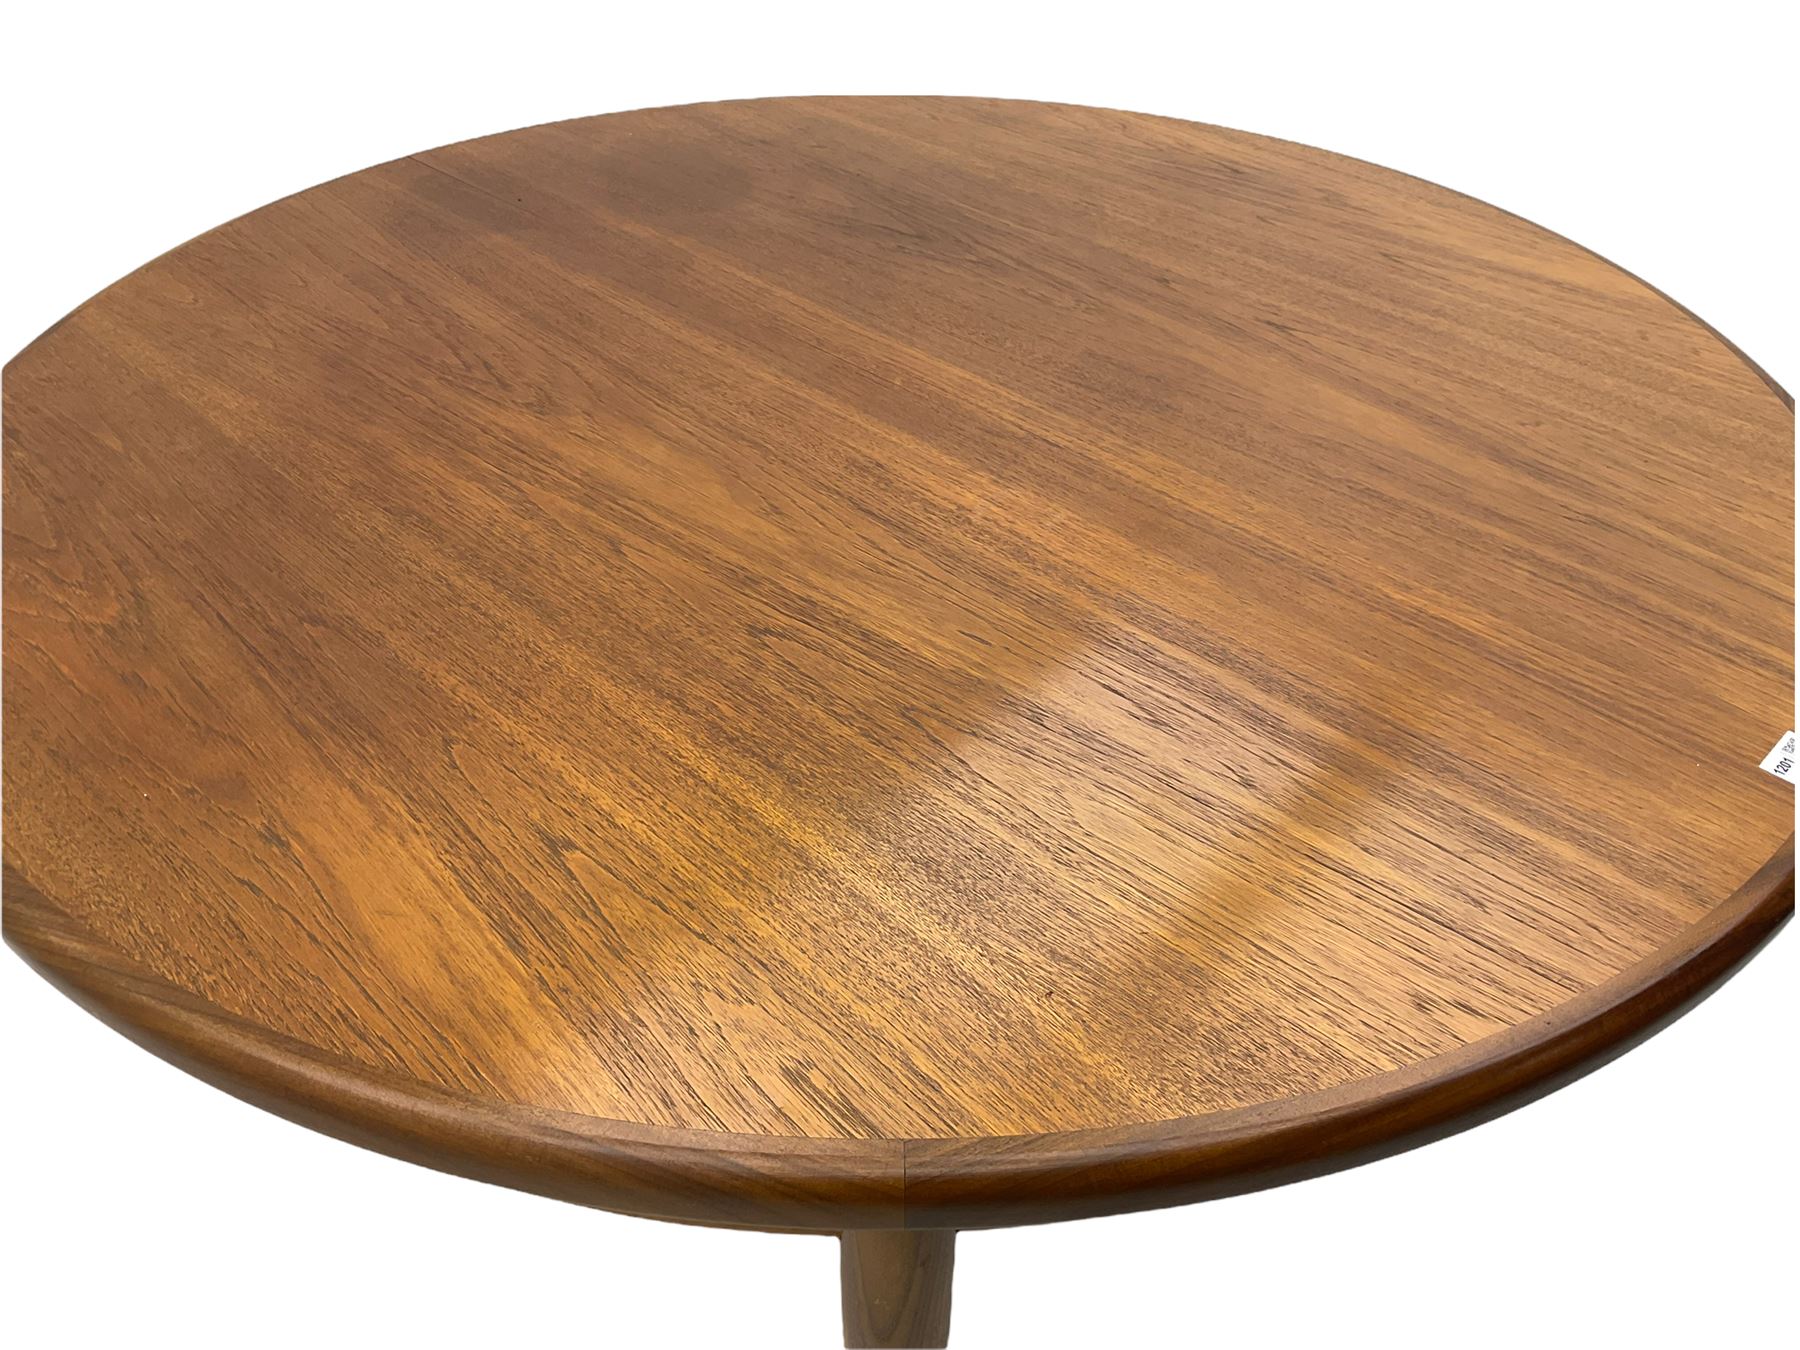 G-Plan Mid-20th century teak circular extending dining table - Image 11 of 21